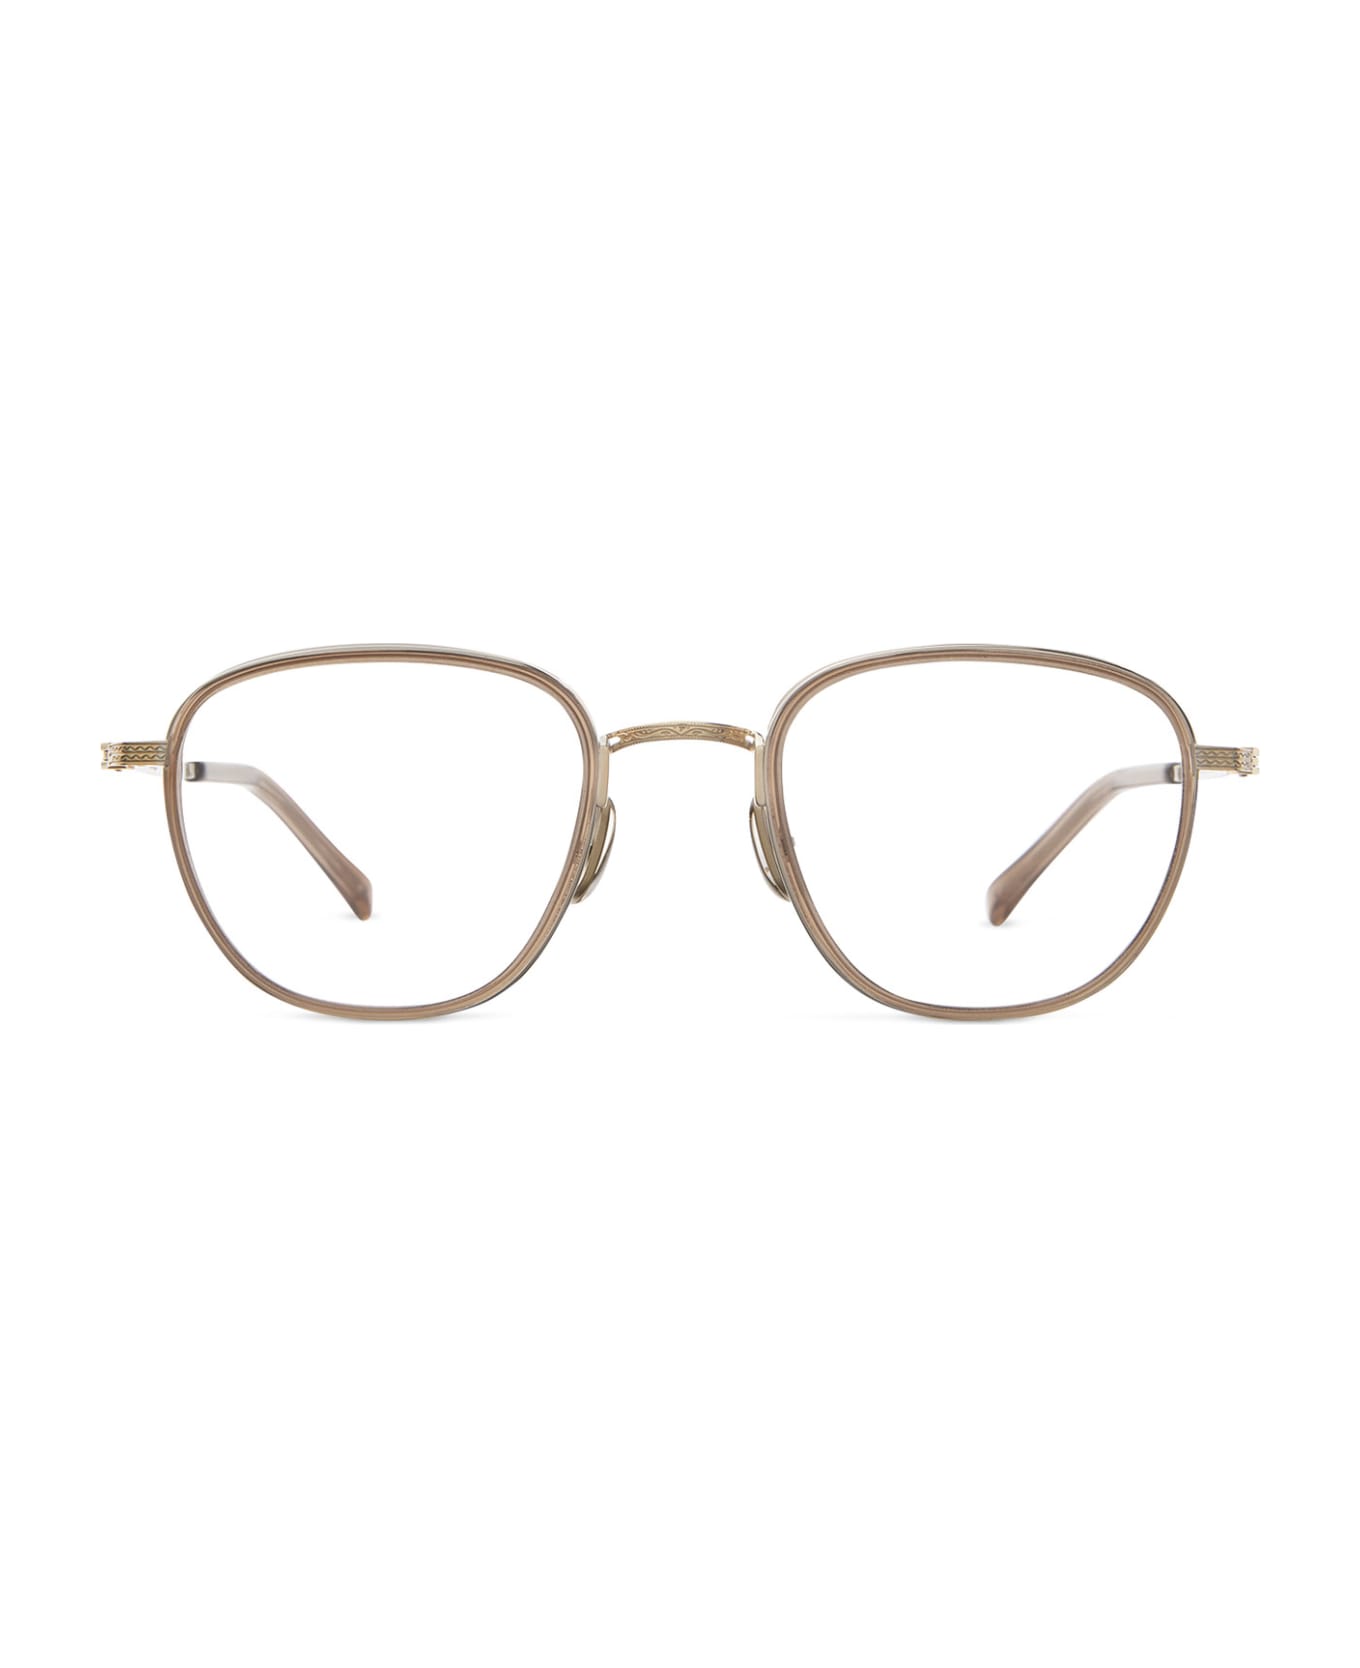 Mr. Leight Griffith Ii C Topaz-12k White Gold Glasses - Topaz-12K White Gold